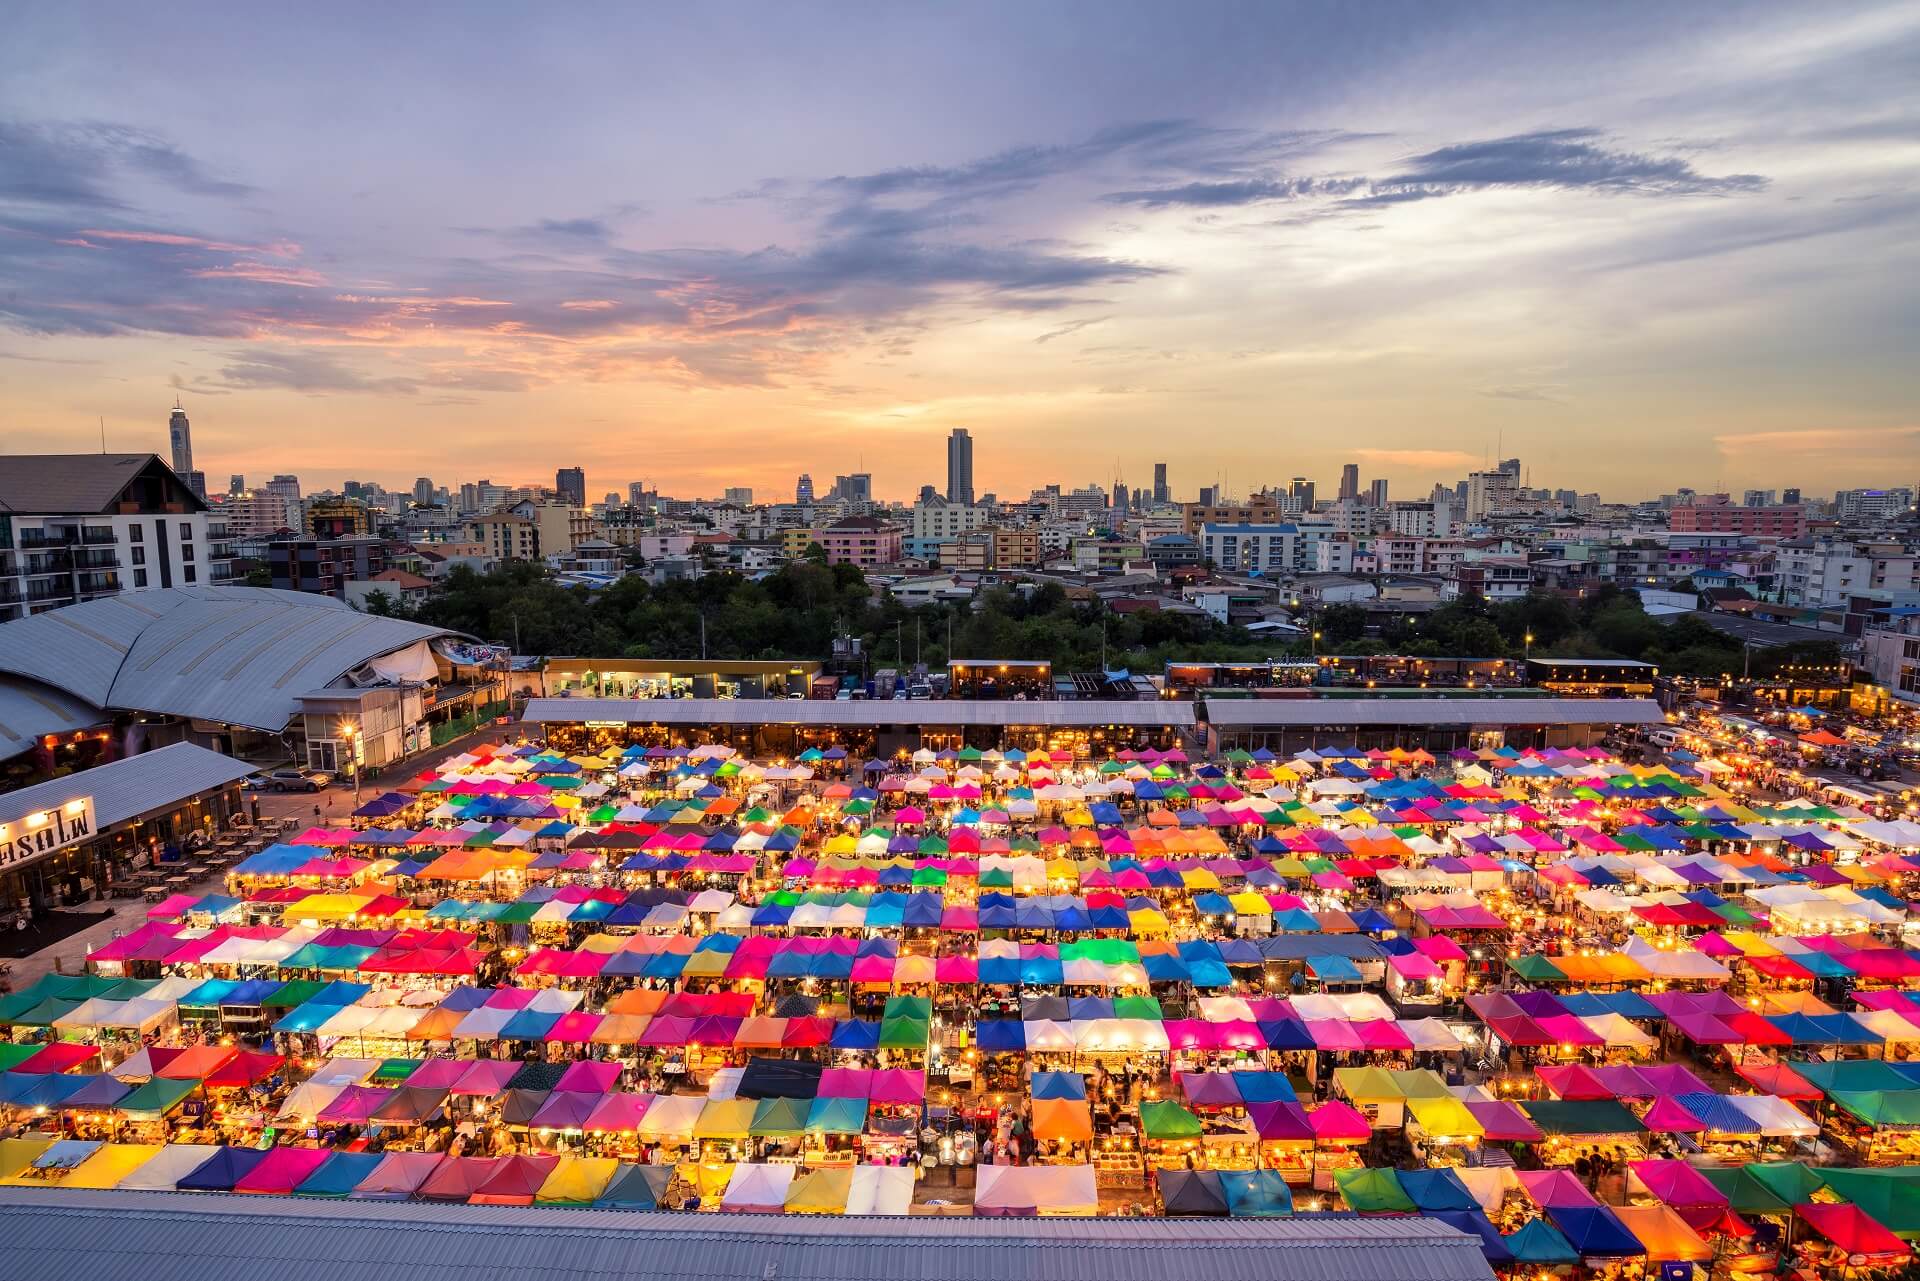 Märkte in Bangkok sind sehr beliebt